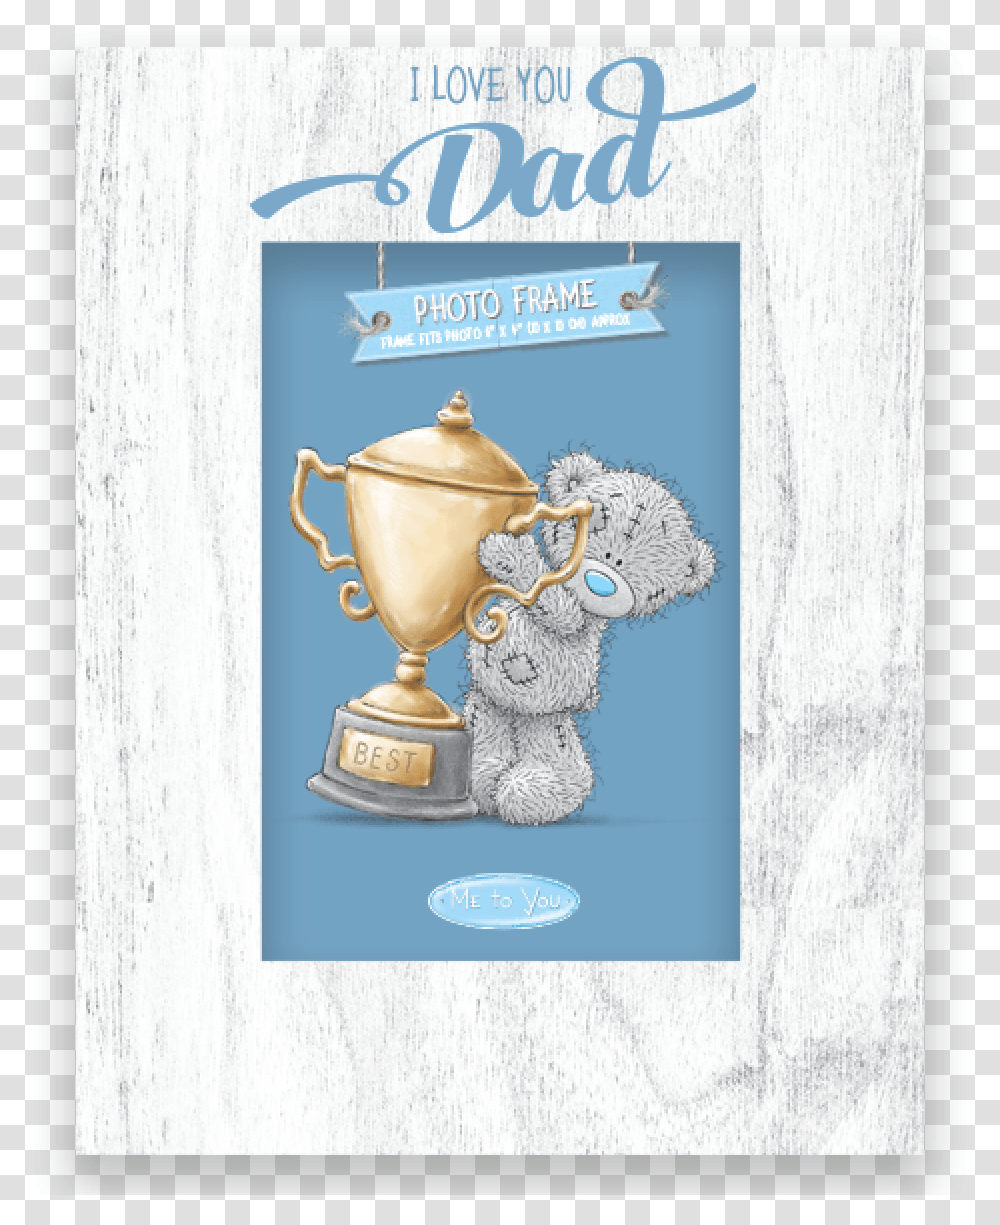 Frame Dadyou Re The Best Illustration, Trophy, Advertisement Transparent Png